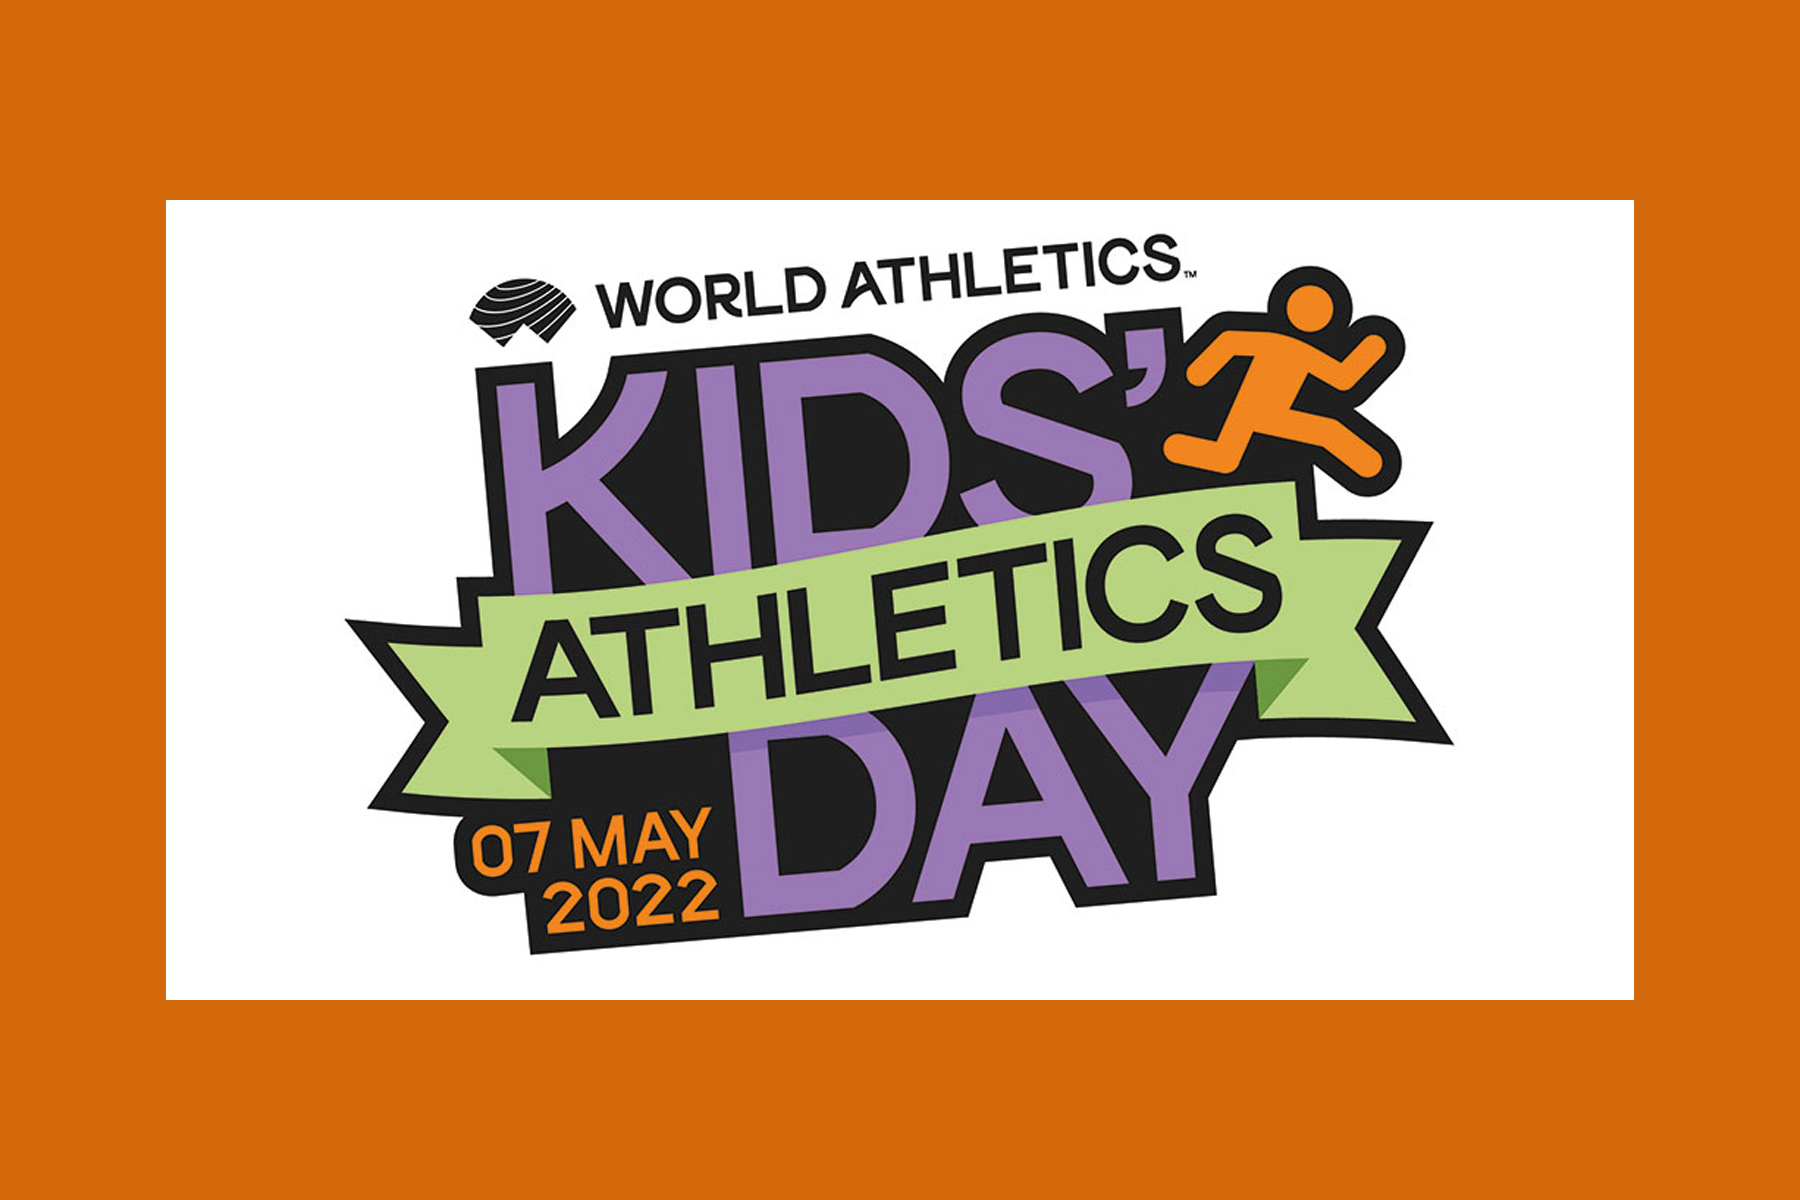 World Athletics to mark Kids' Athletics Day on May 7, 2022